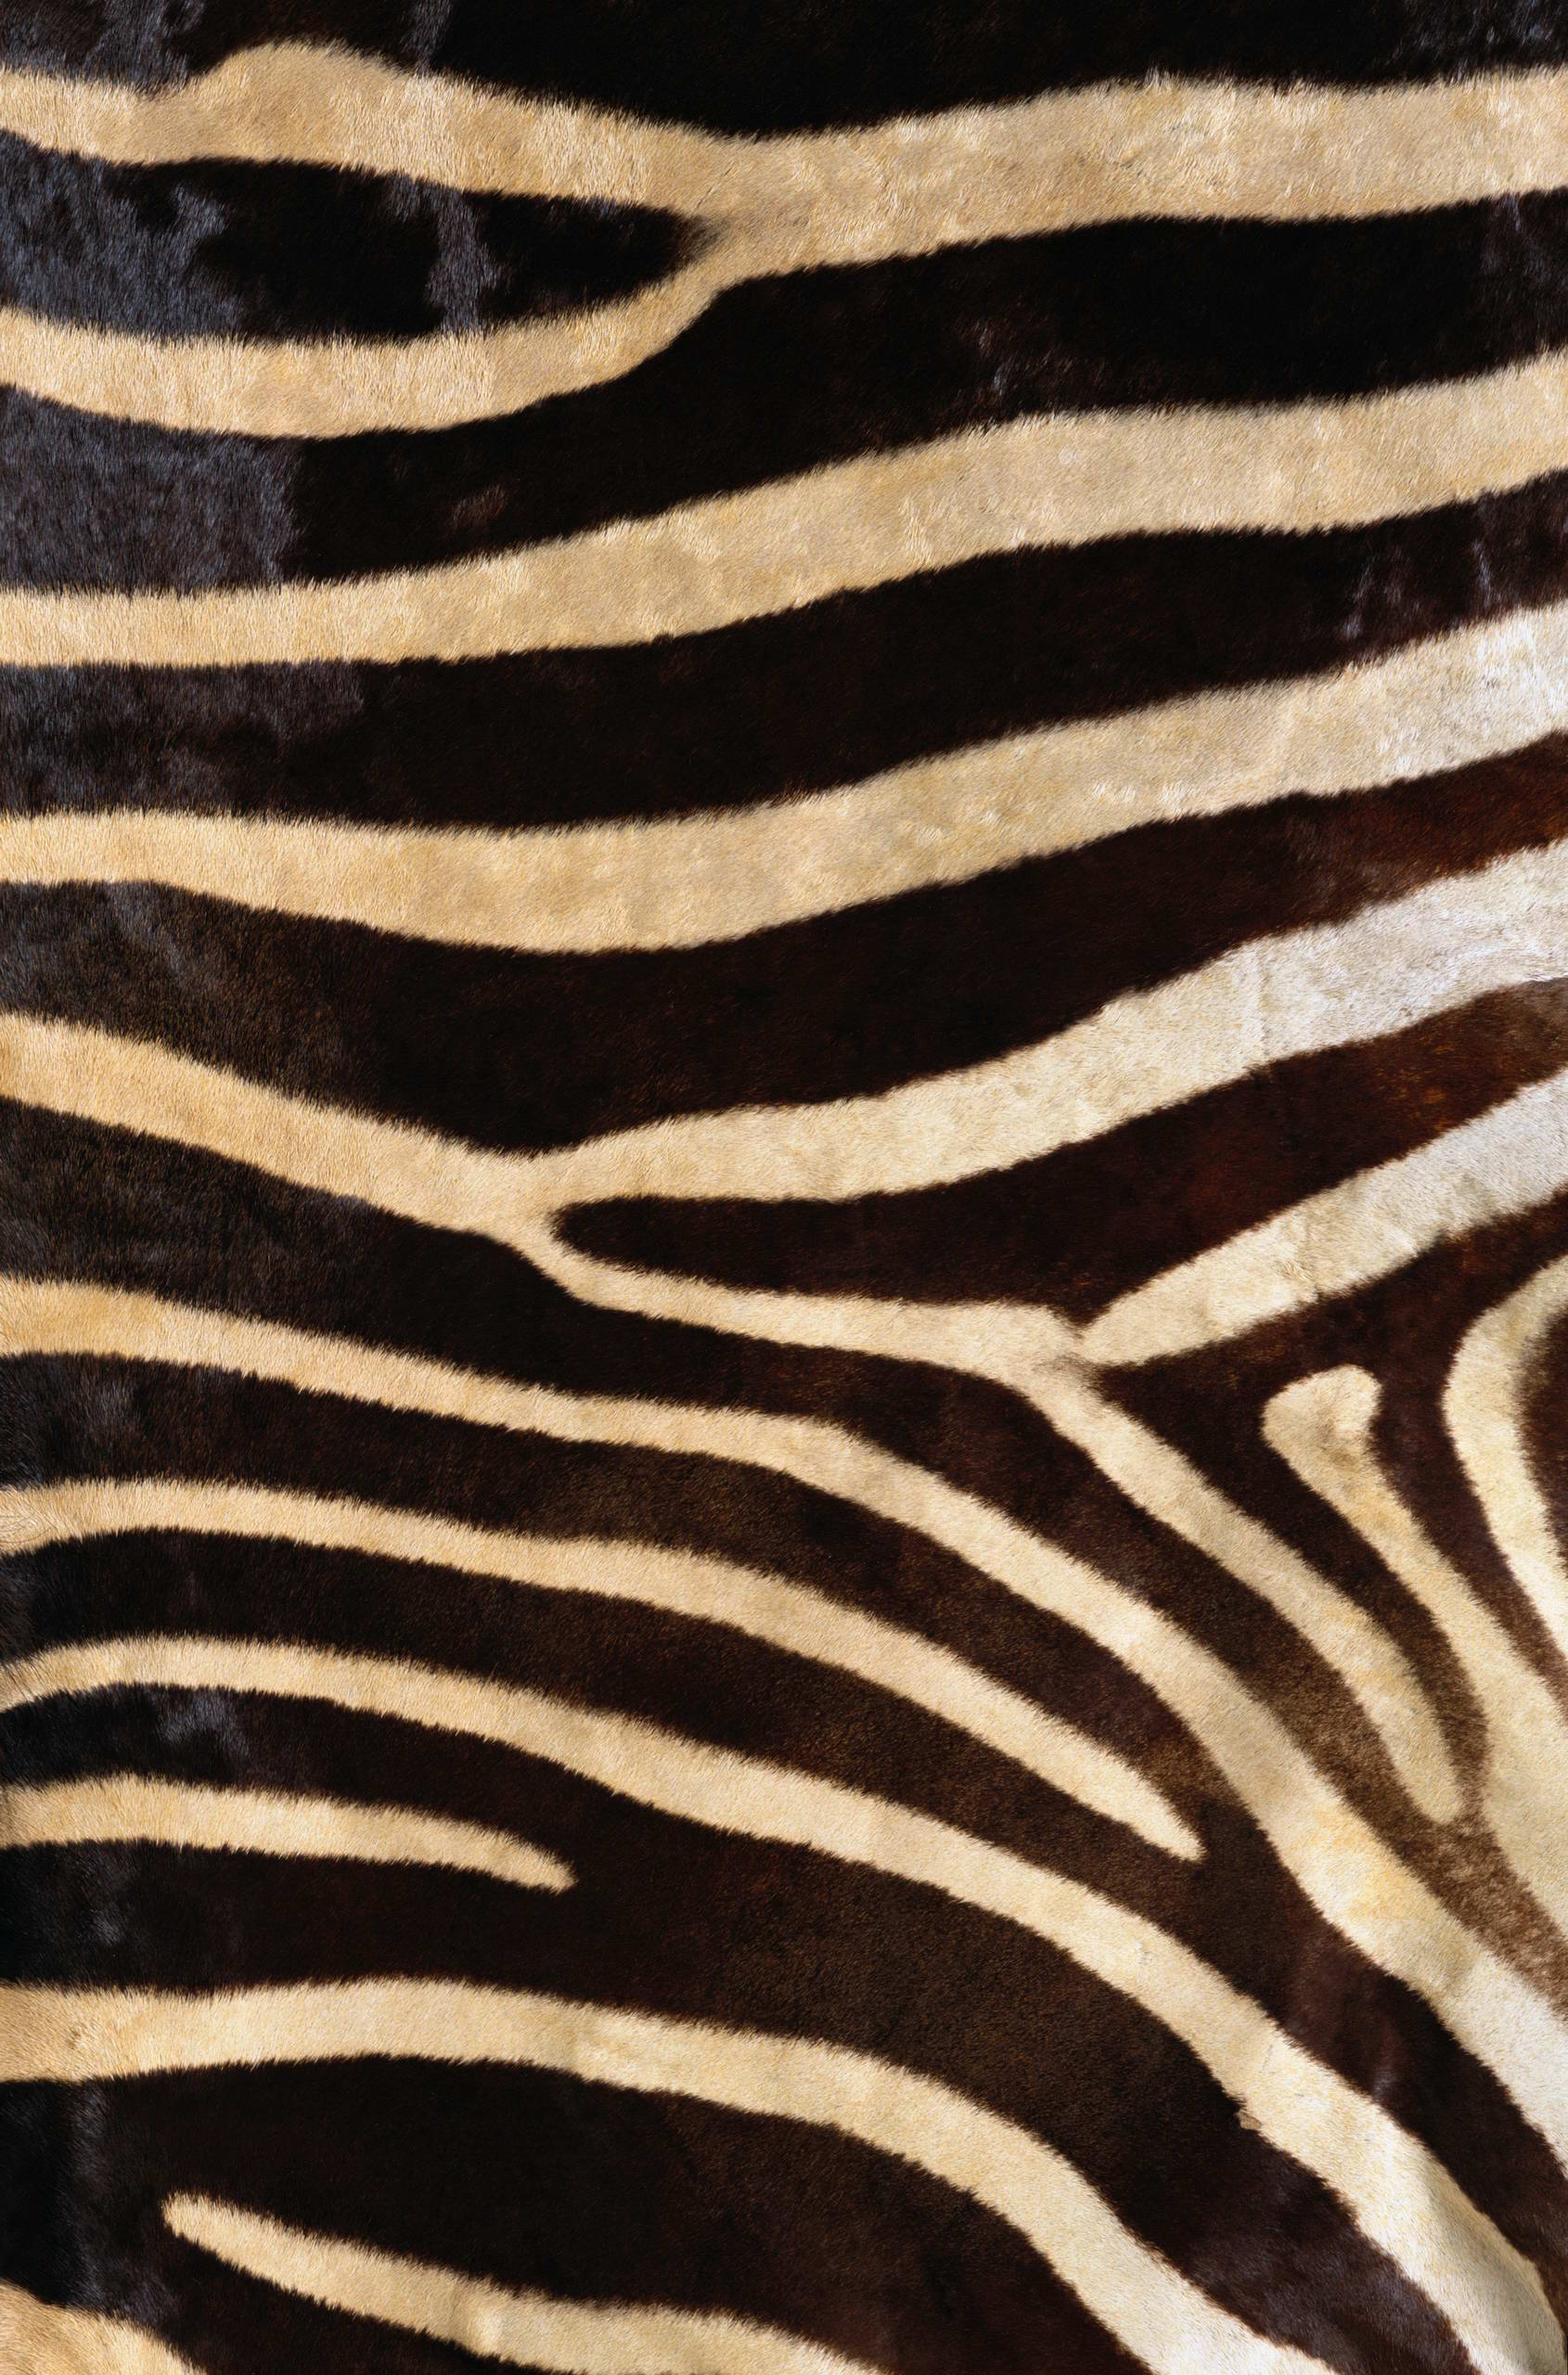  , texture fur, zebra fur texture background, background